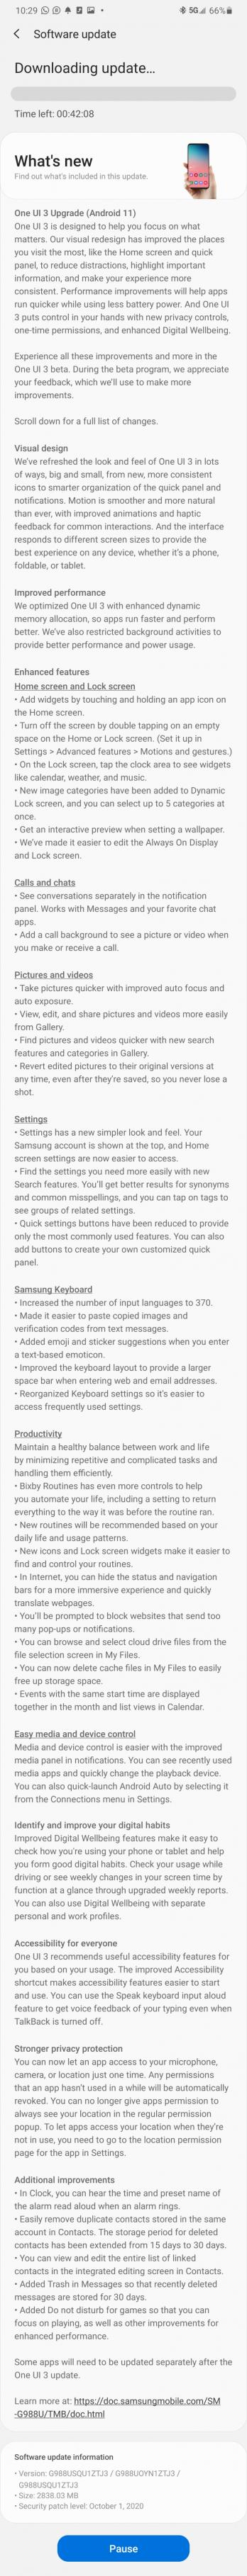 Samsung Galaxy S20 Ultra One UI 3.0 Public Beta Update Changelog USA